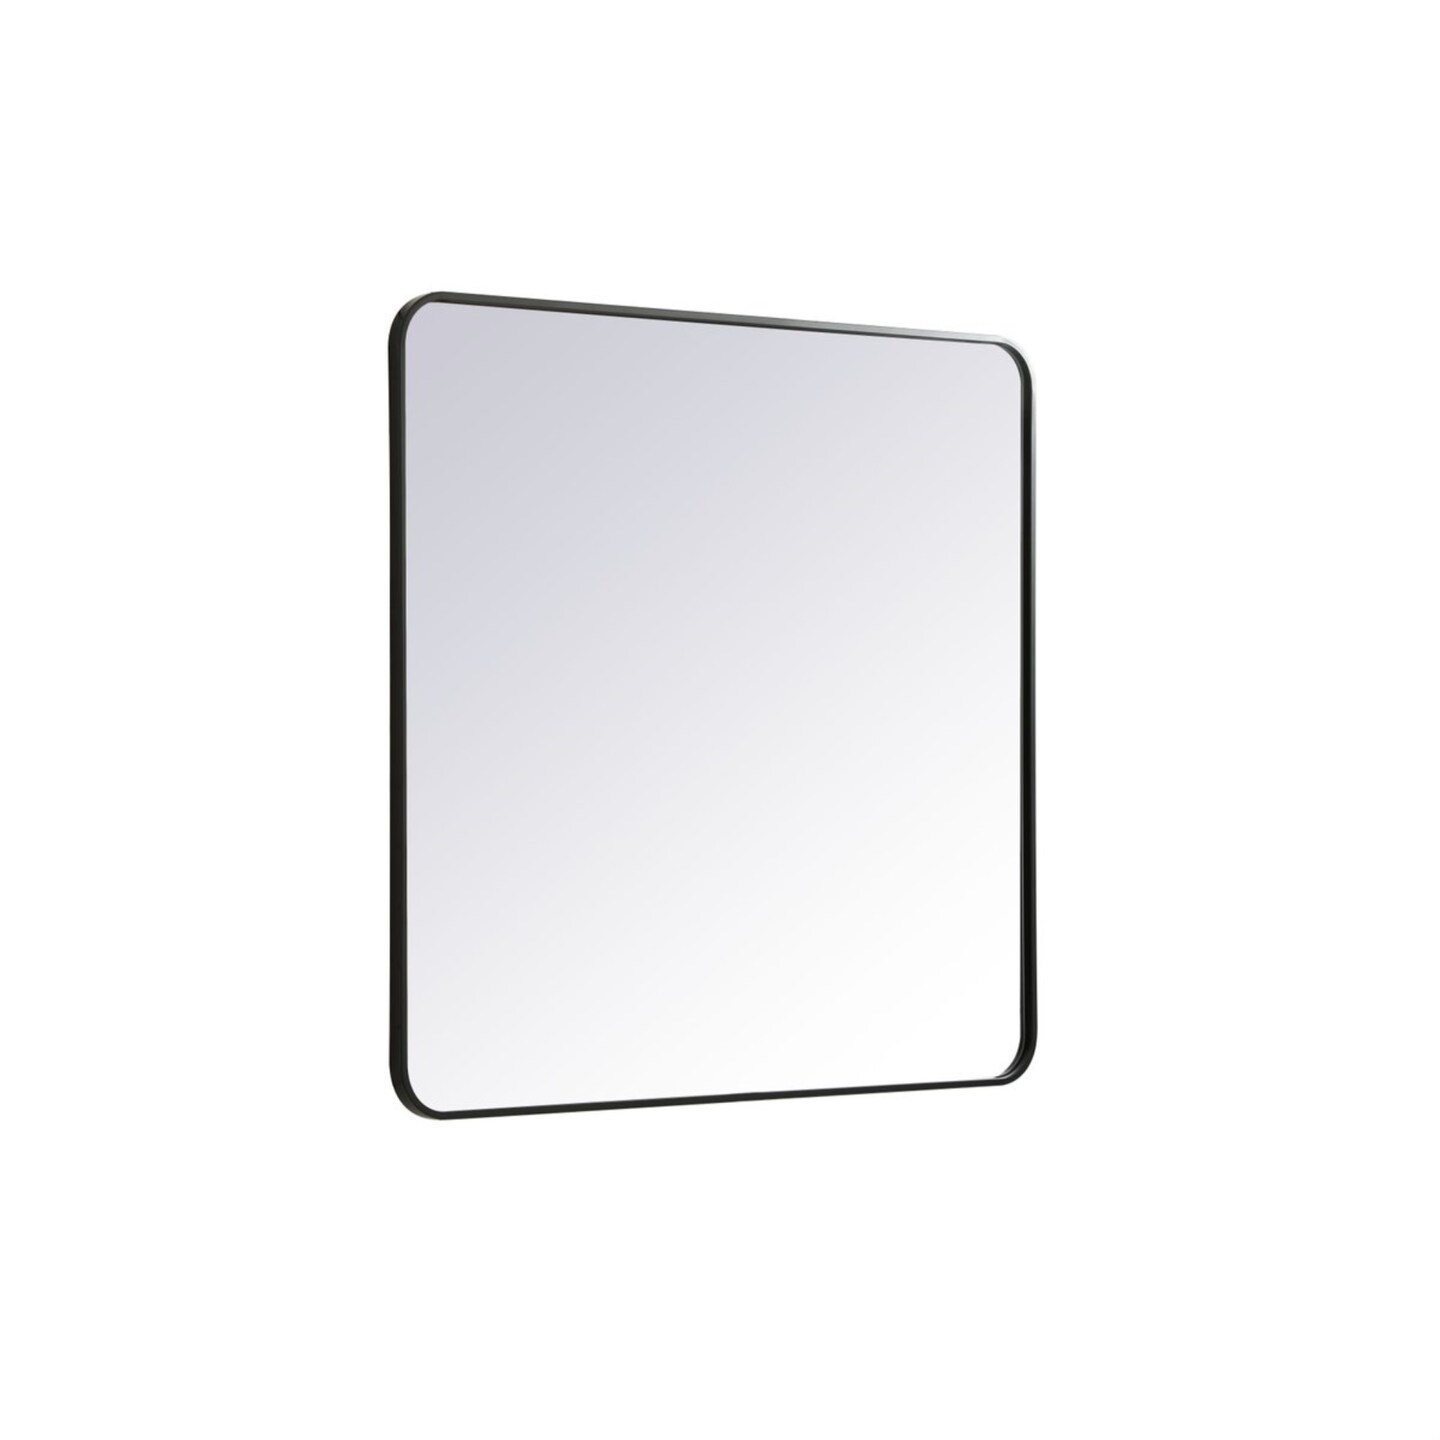 Soft corner metal rectangular mirror 36x36 inch in Black | Mirrors ...